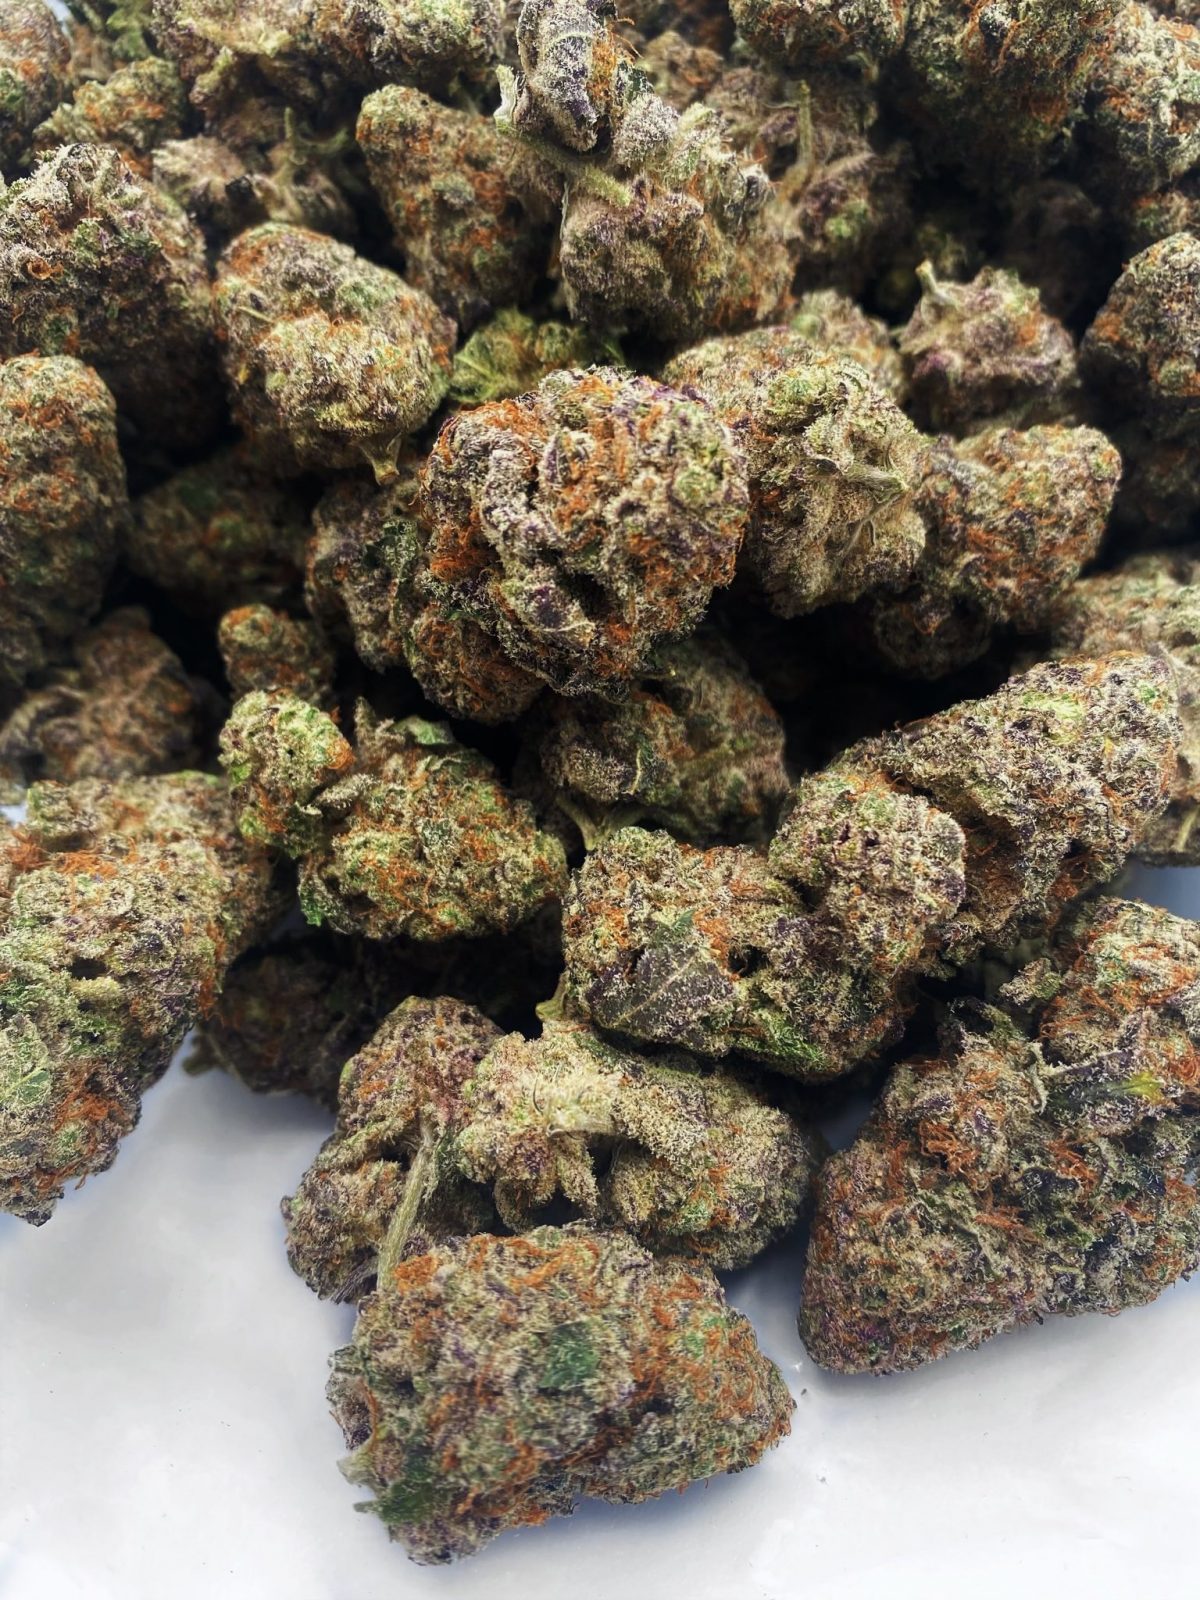 High Octane AAA Strain of weed in Surrey BC